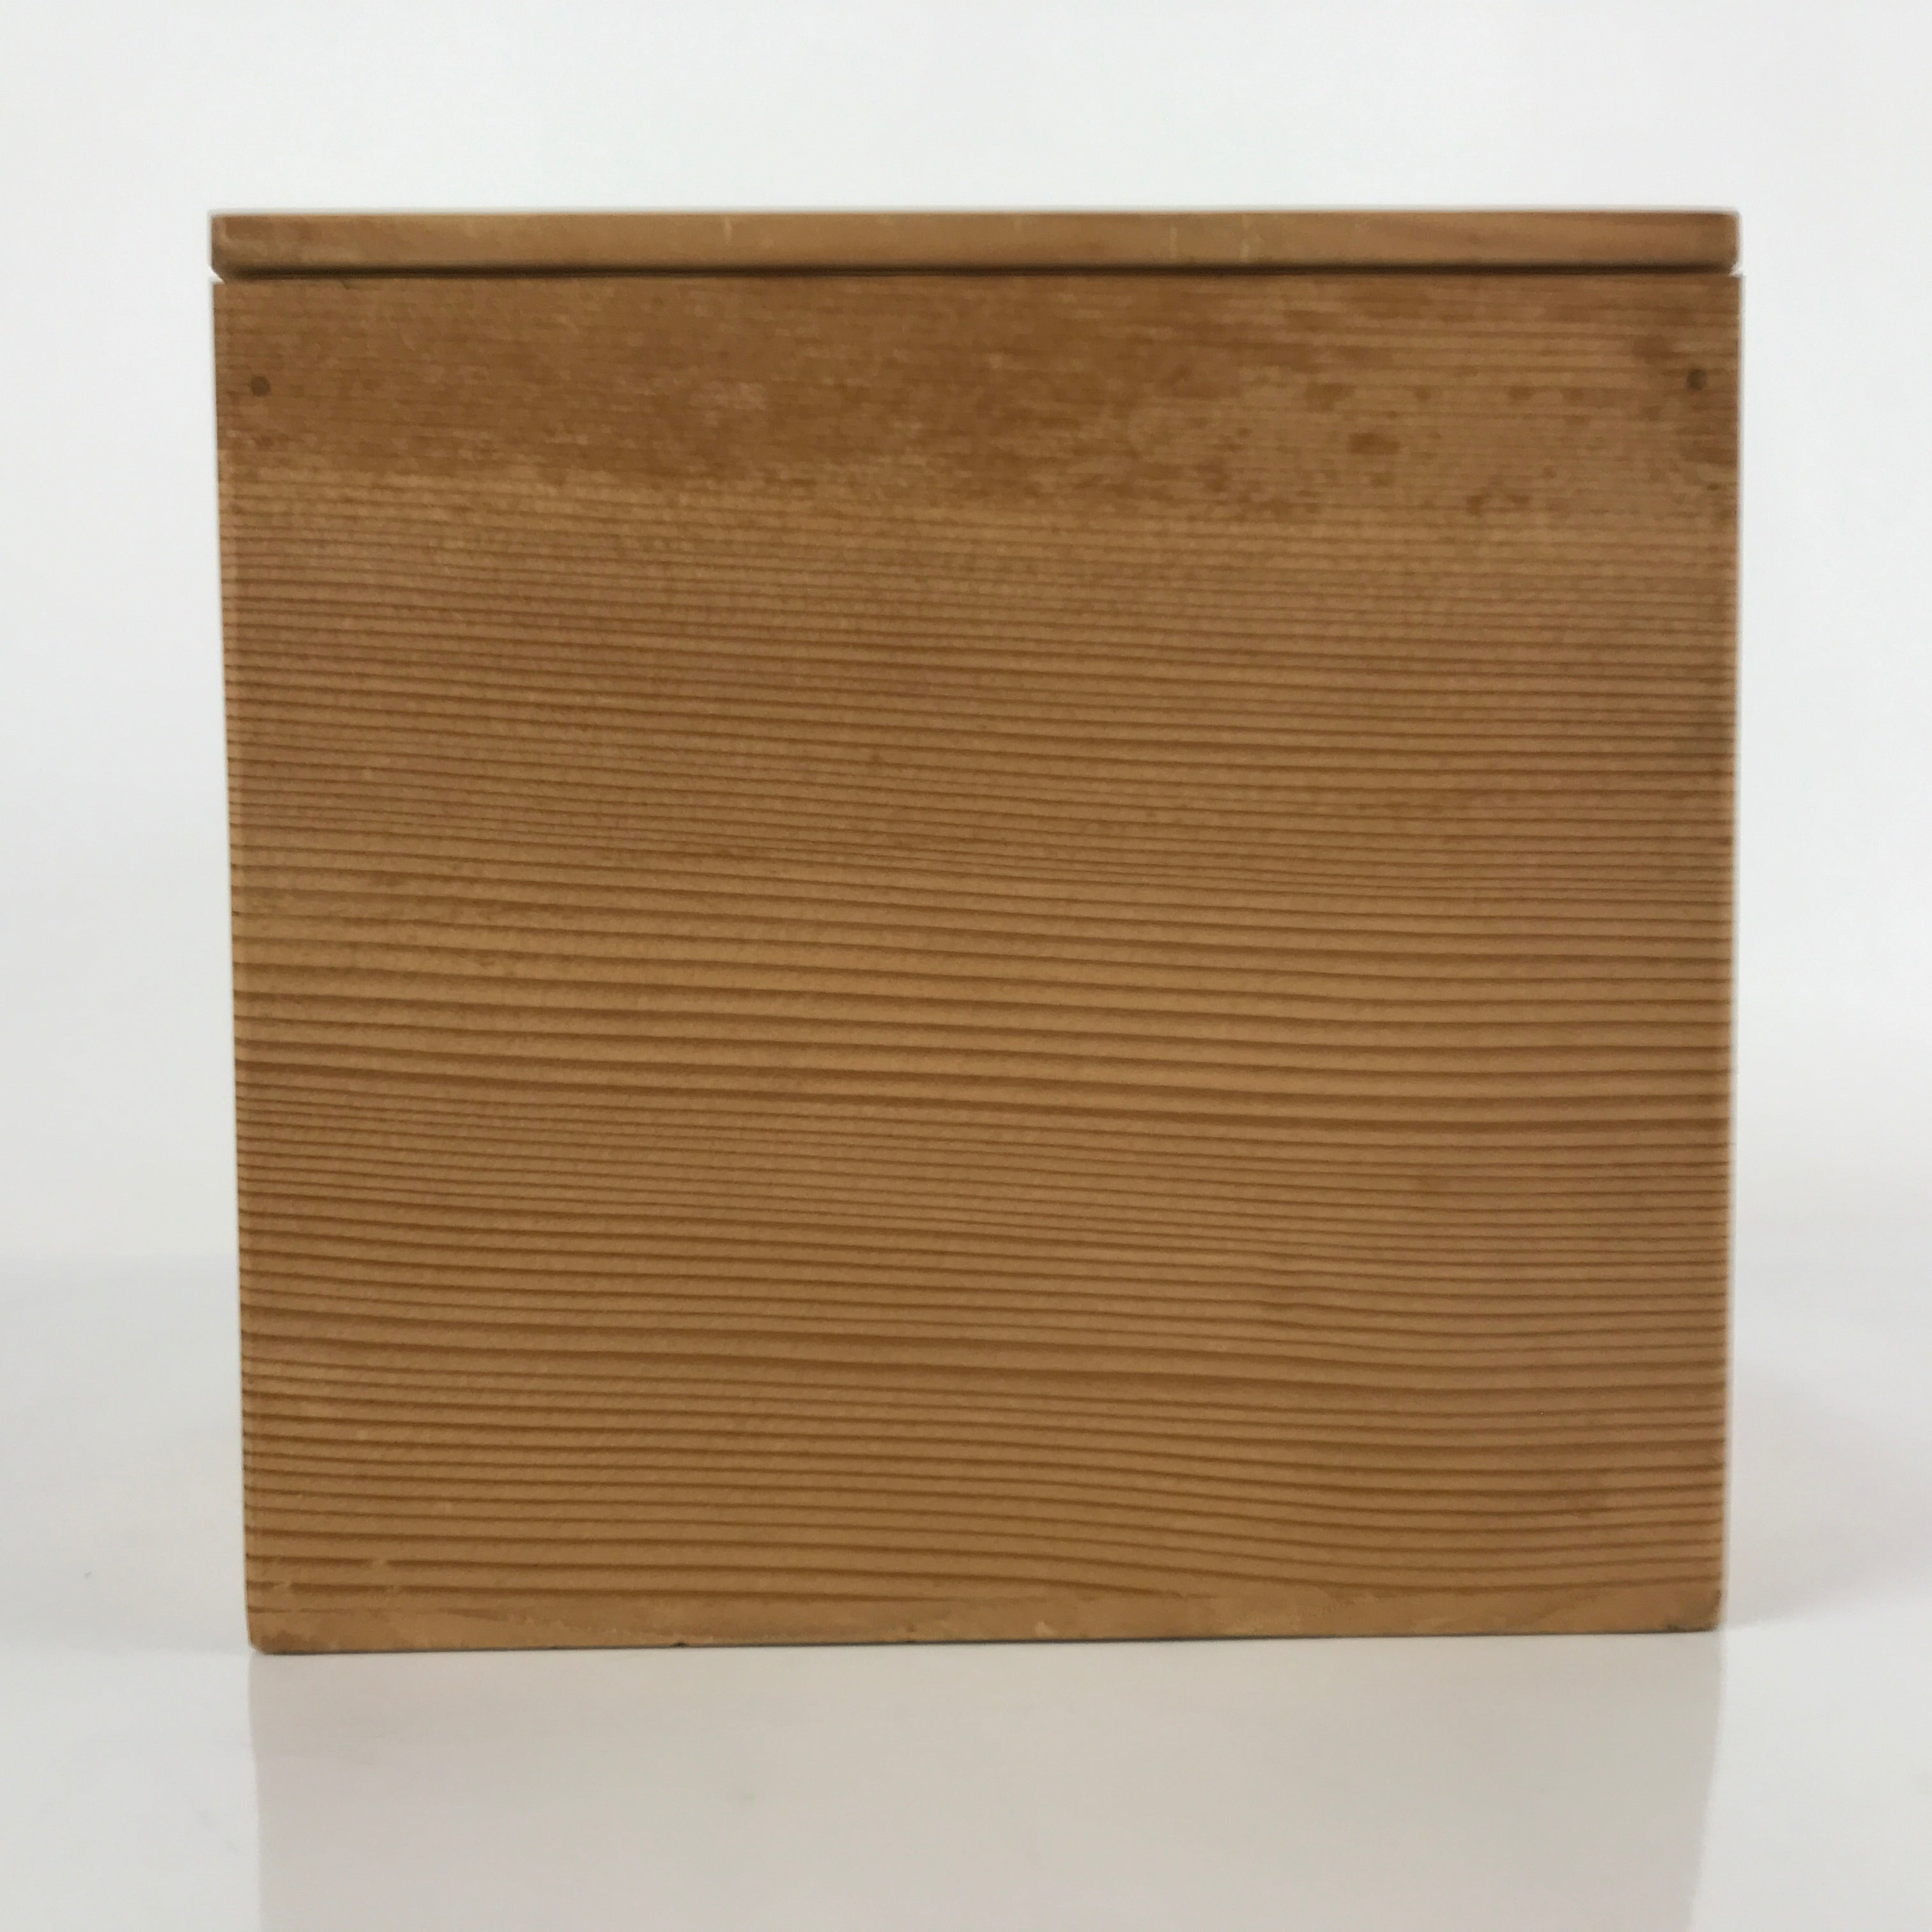 Vintage Japanese Wooden Lidded Storage Box Inside 18x18x17cm Brown X121